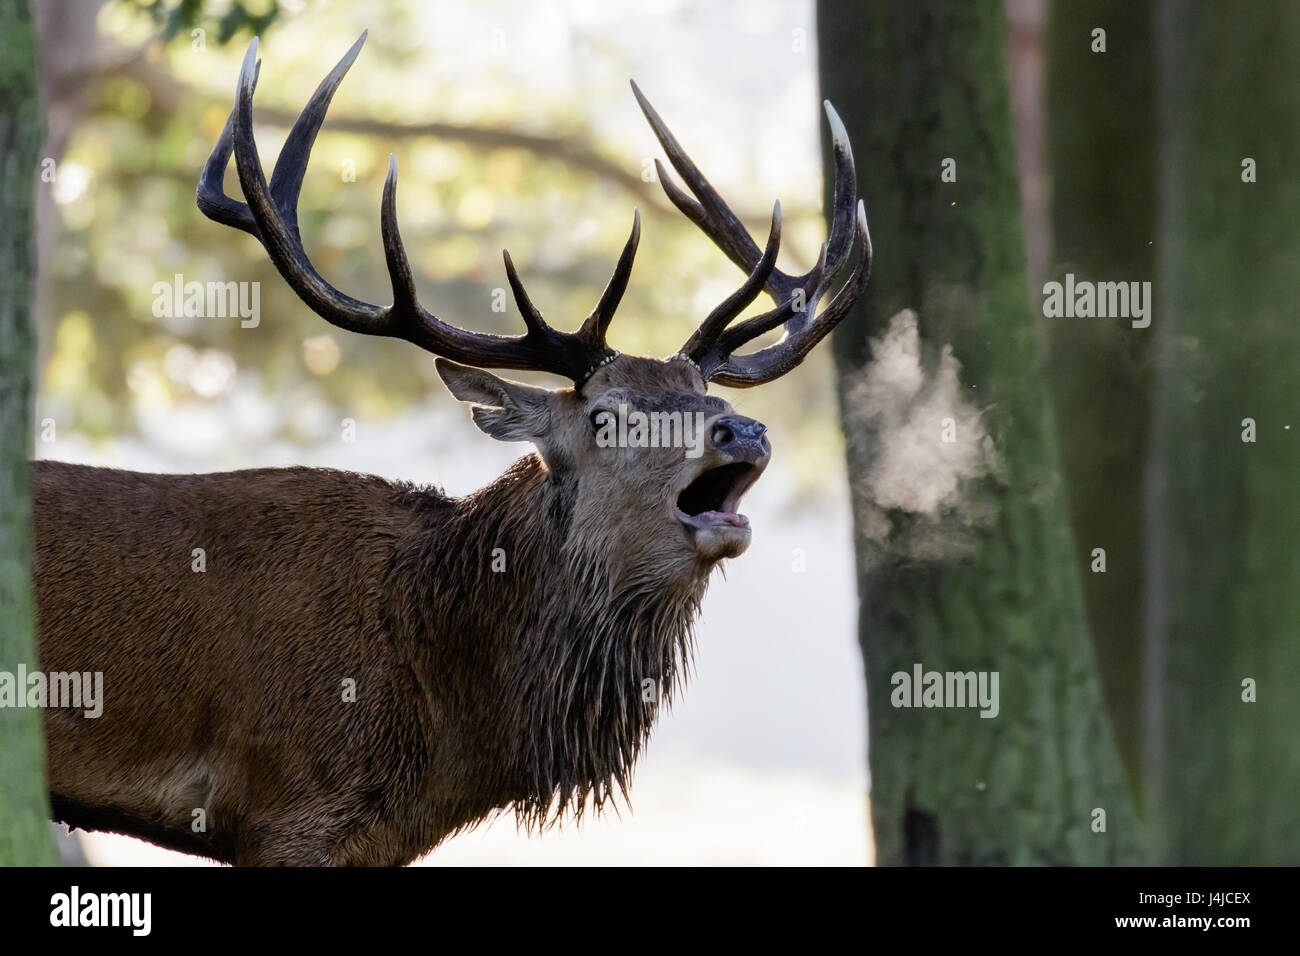 Red Deer cervo (Cervus elaphus) ruggente o chiamando in early morning mist, mostrando il respiro Foto Stock